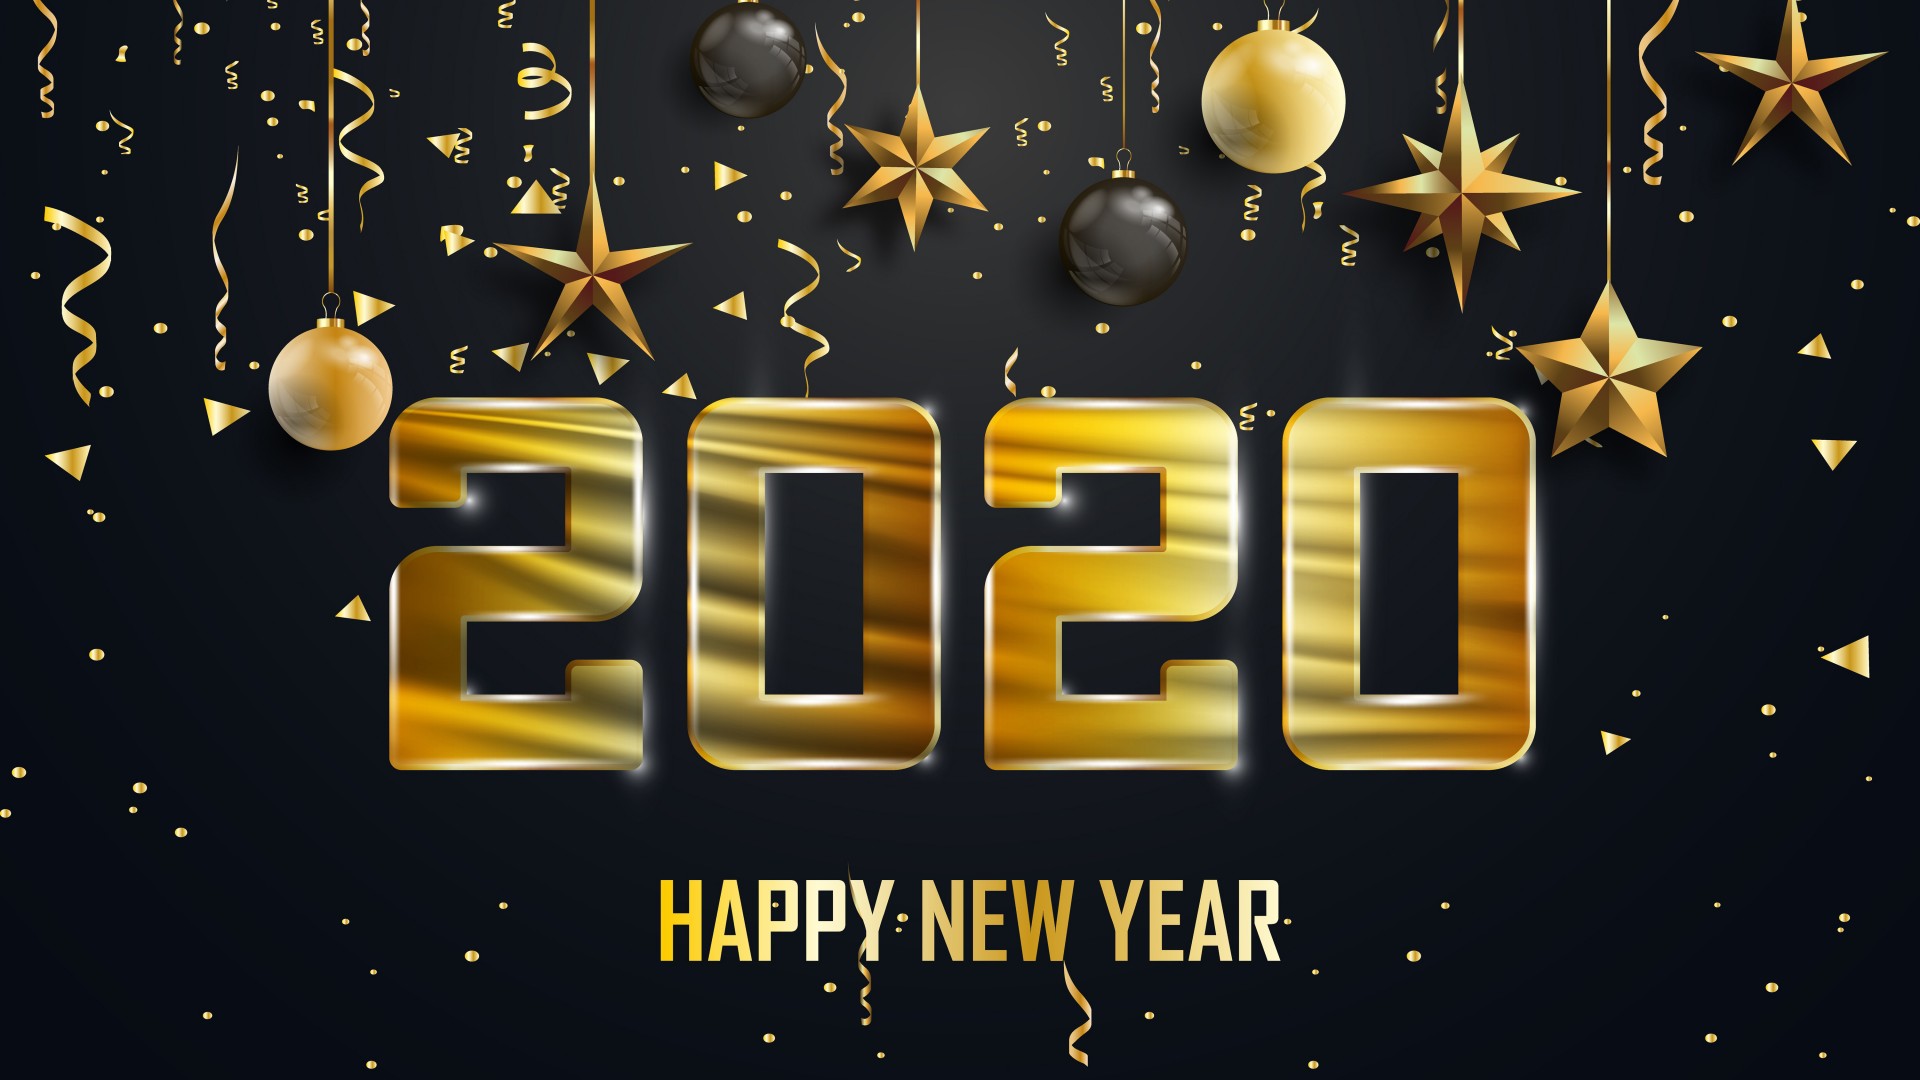 Happy New Year HD Wallpaper For Desktop